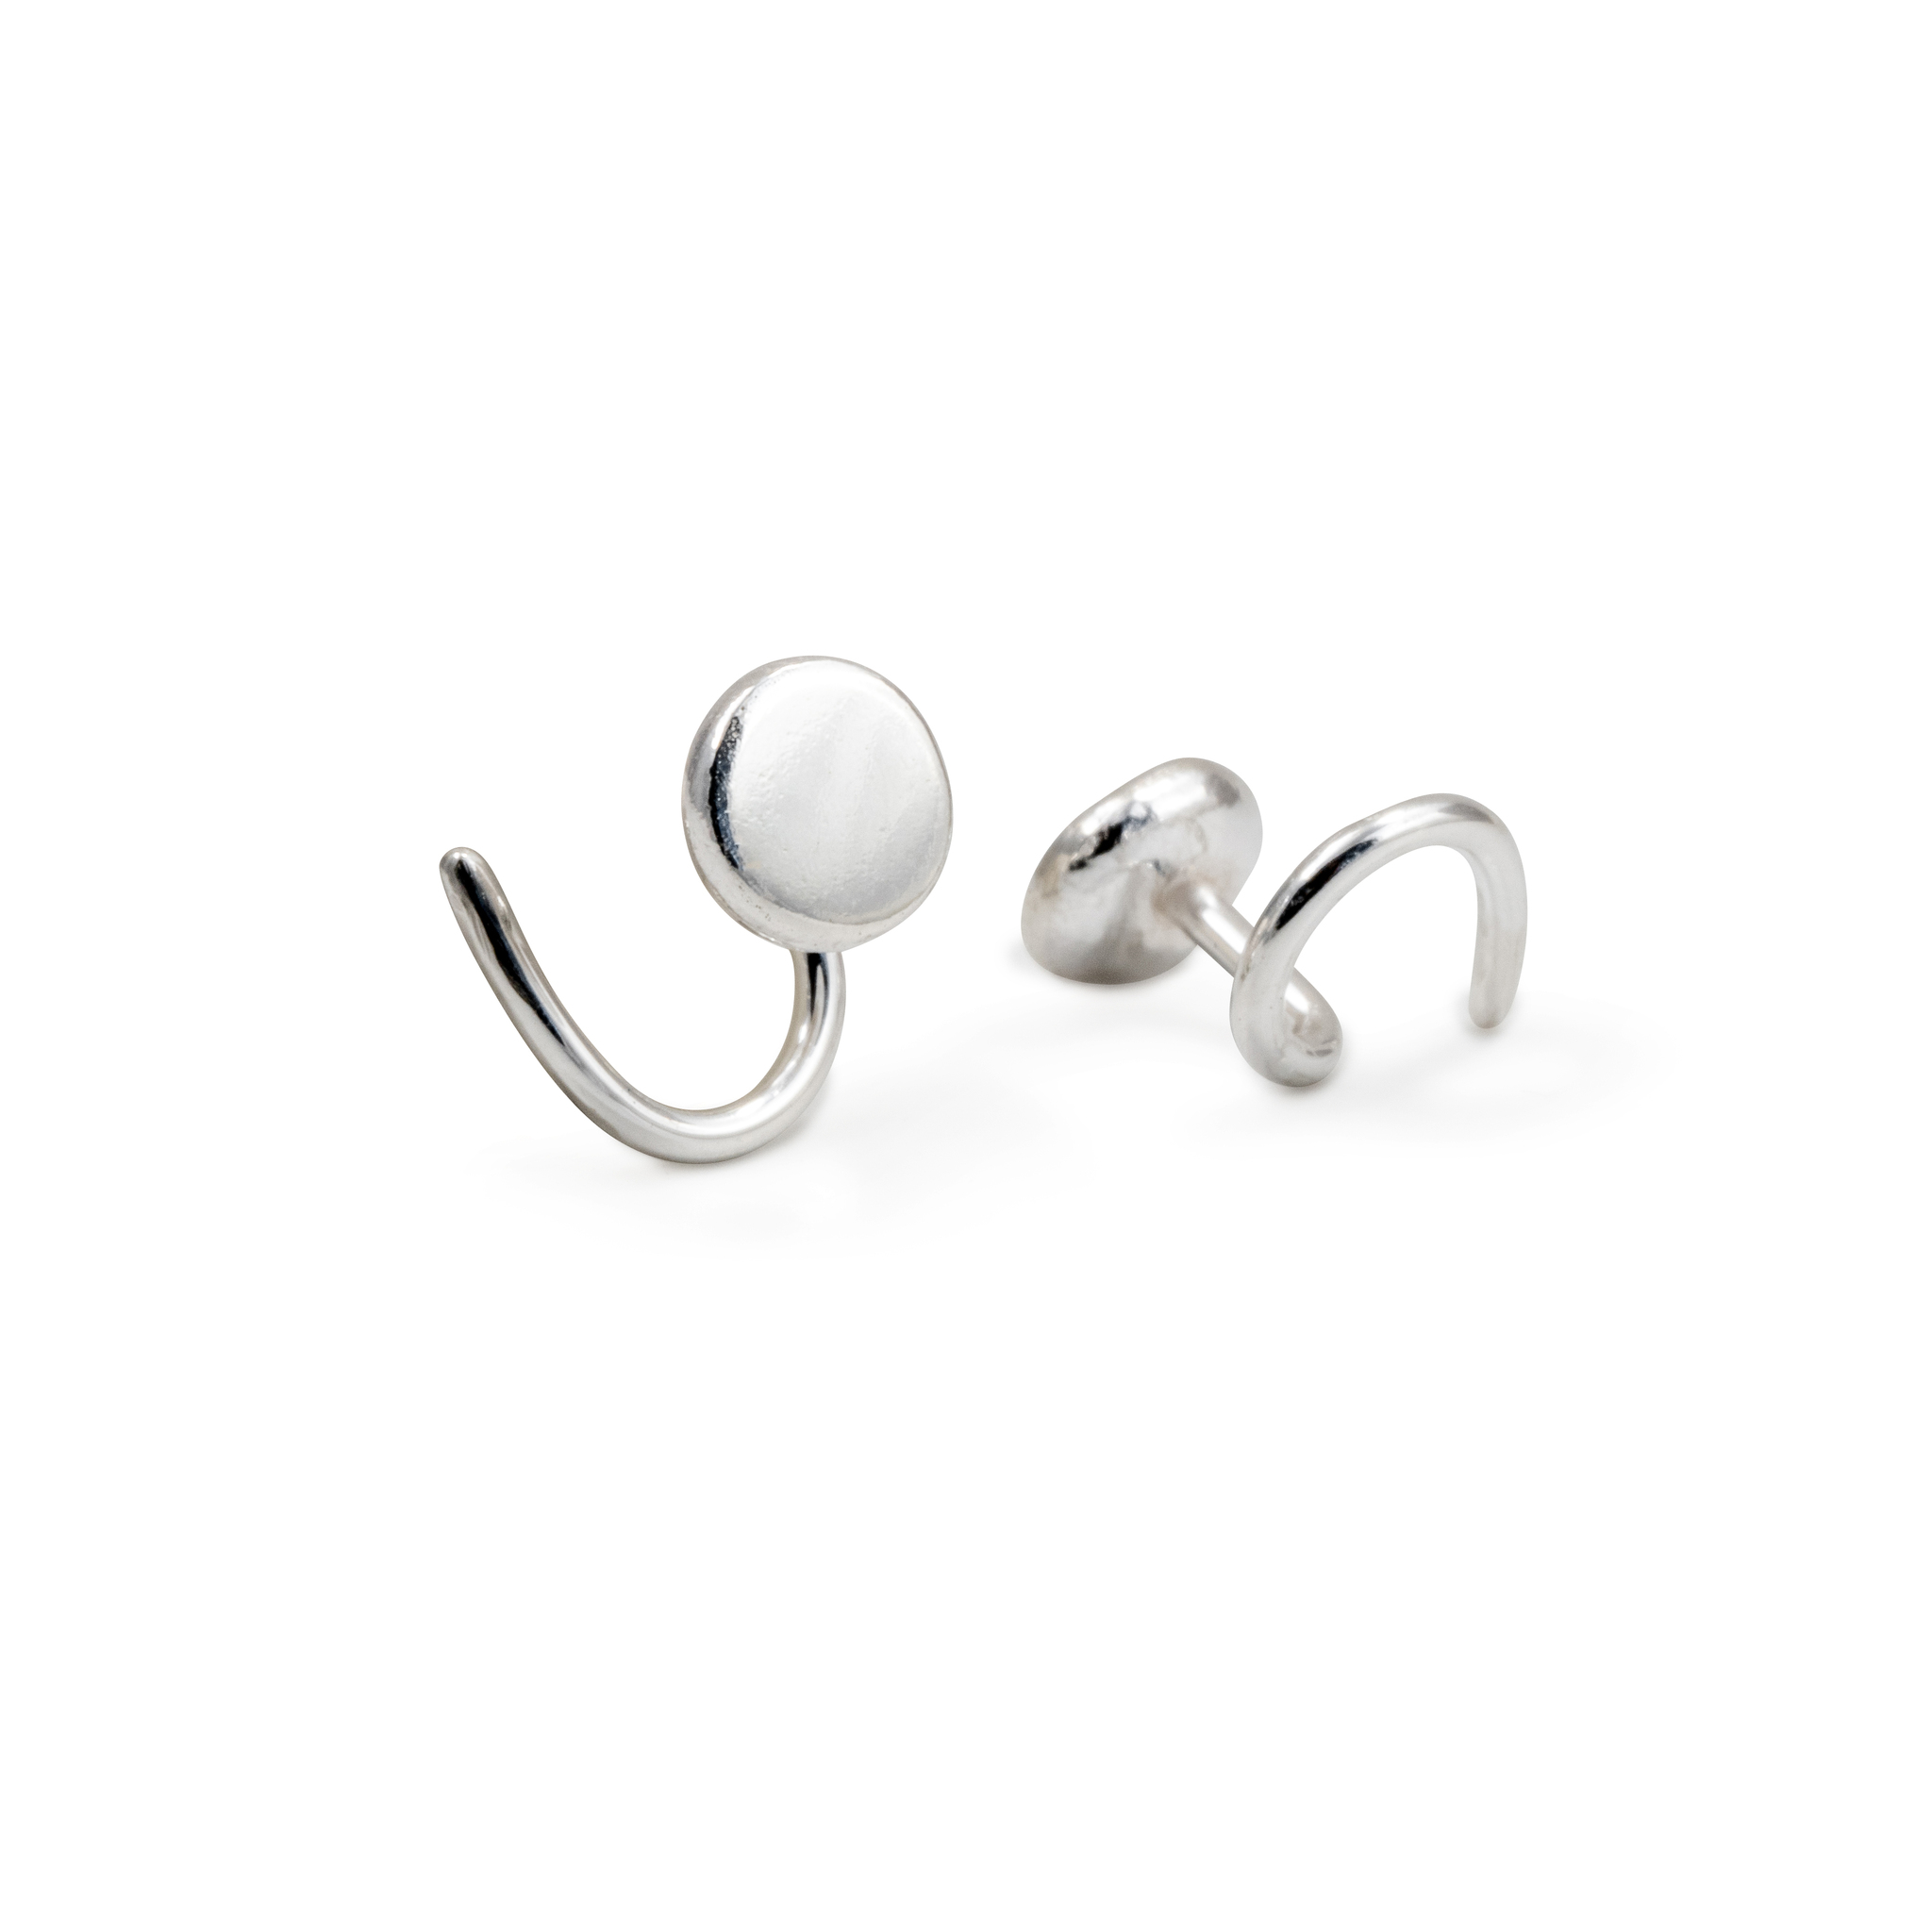 Blenke Comfort Earrings Recycled Sterling Silver